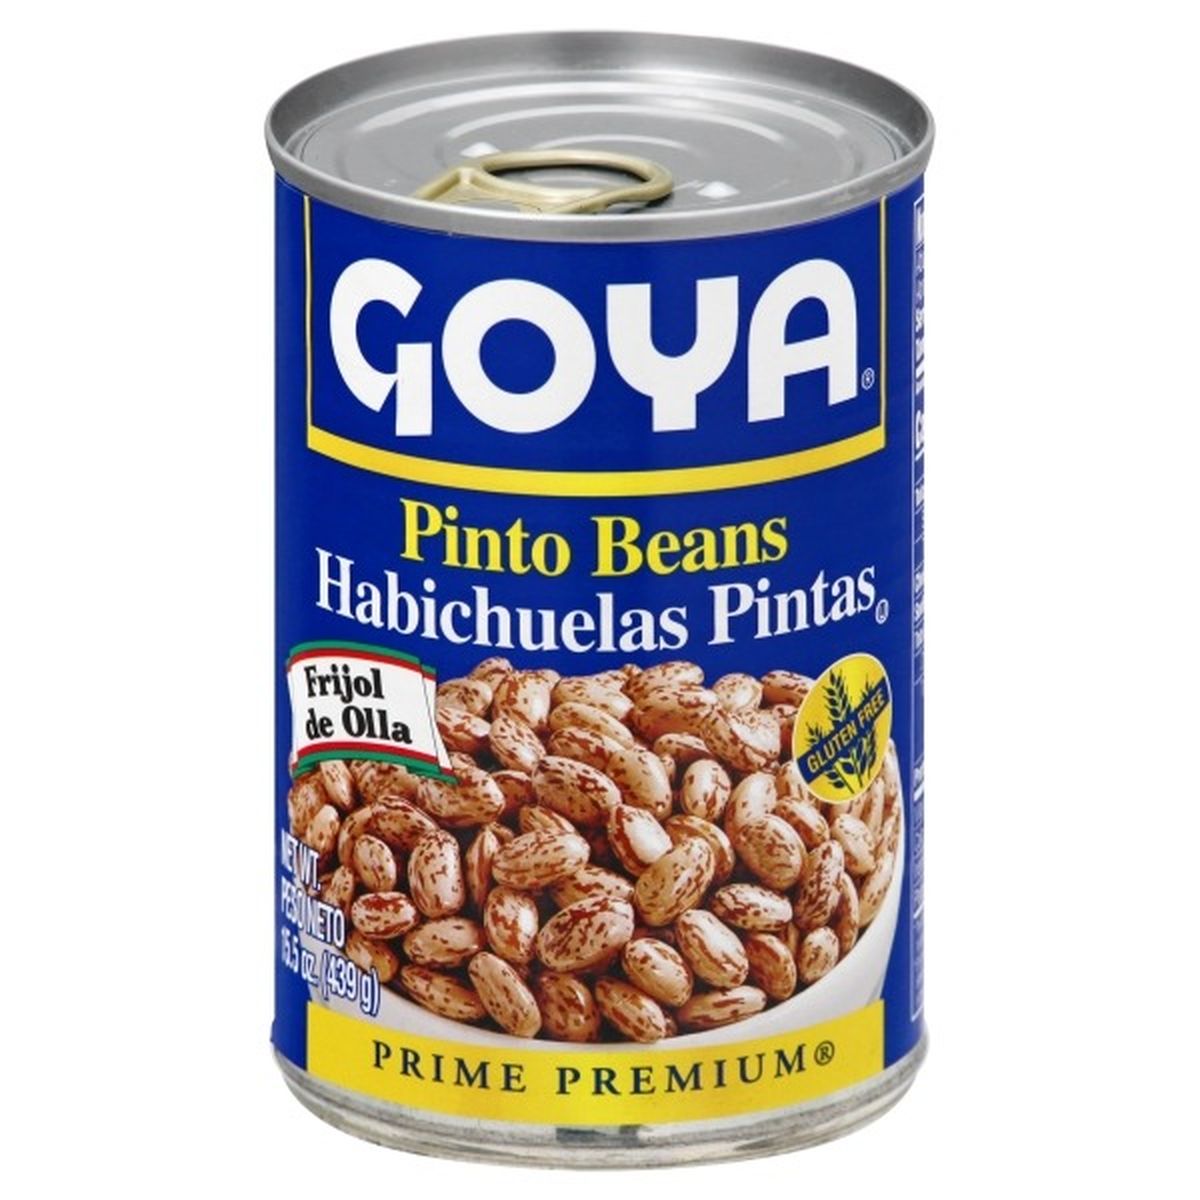 Calories in Goya Prime Premium Pinto Beans